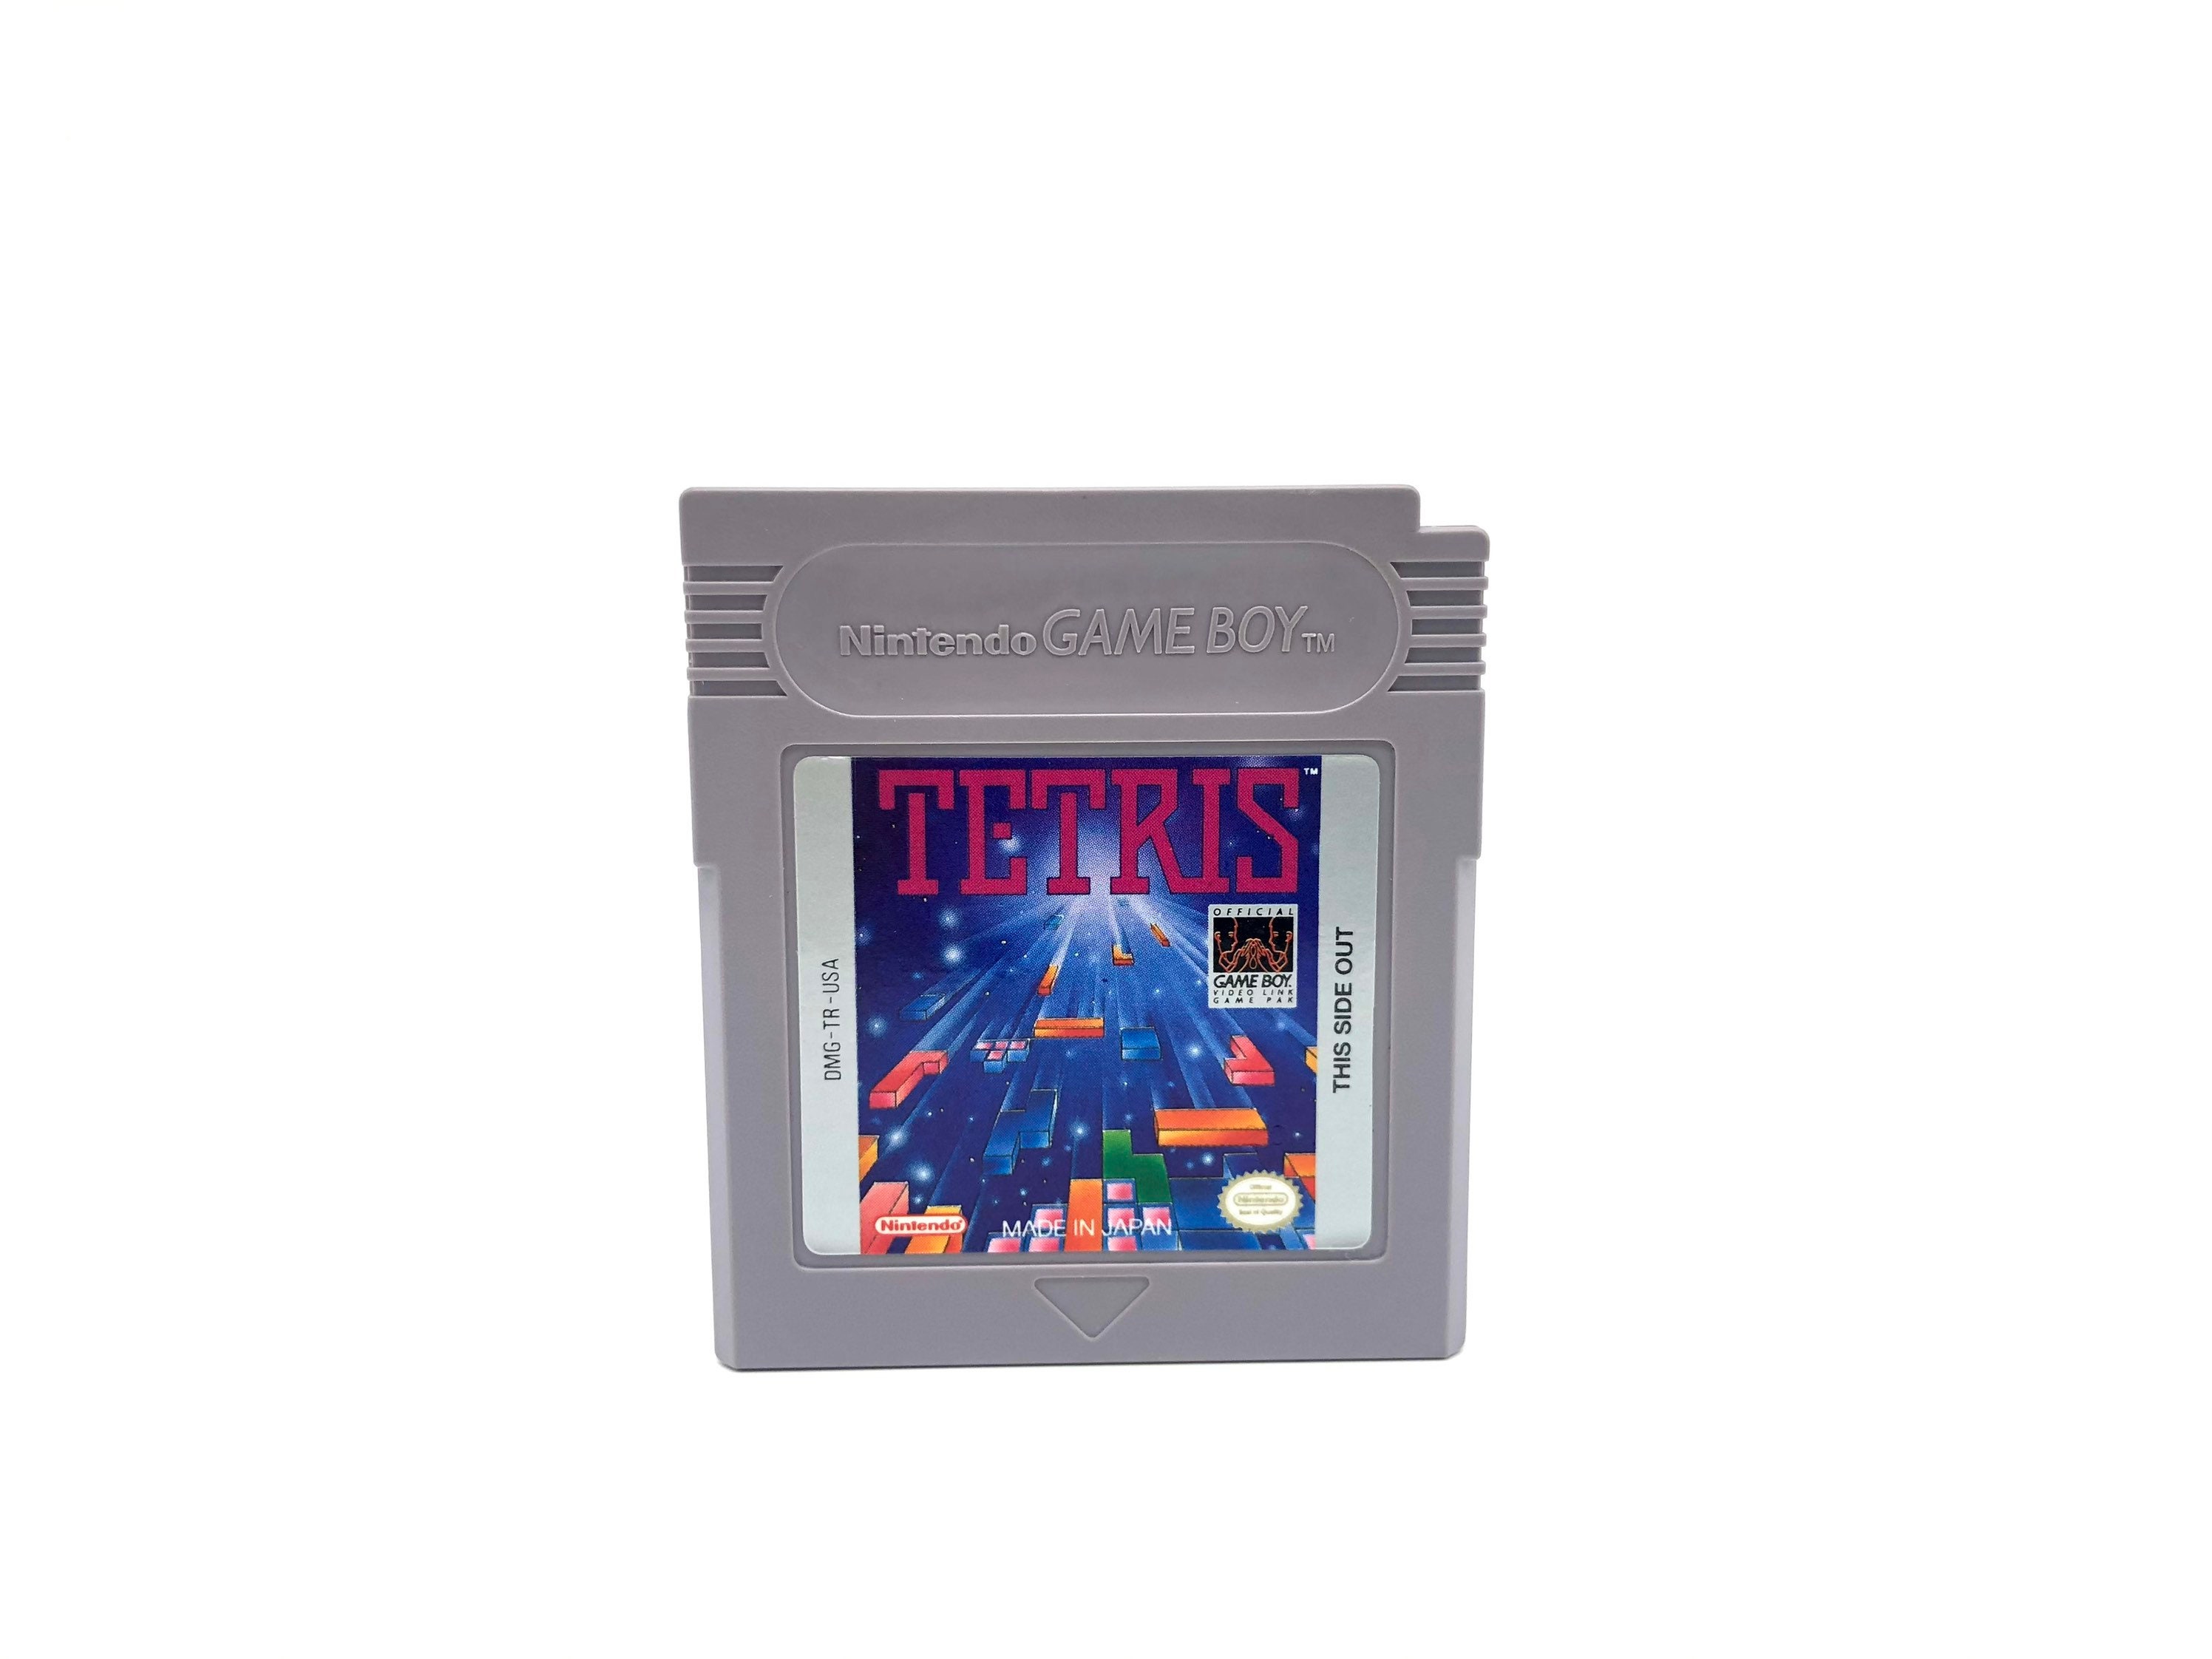 Tetris Extreme Download - All the fun of the original Tetris with